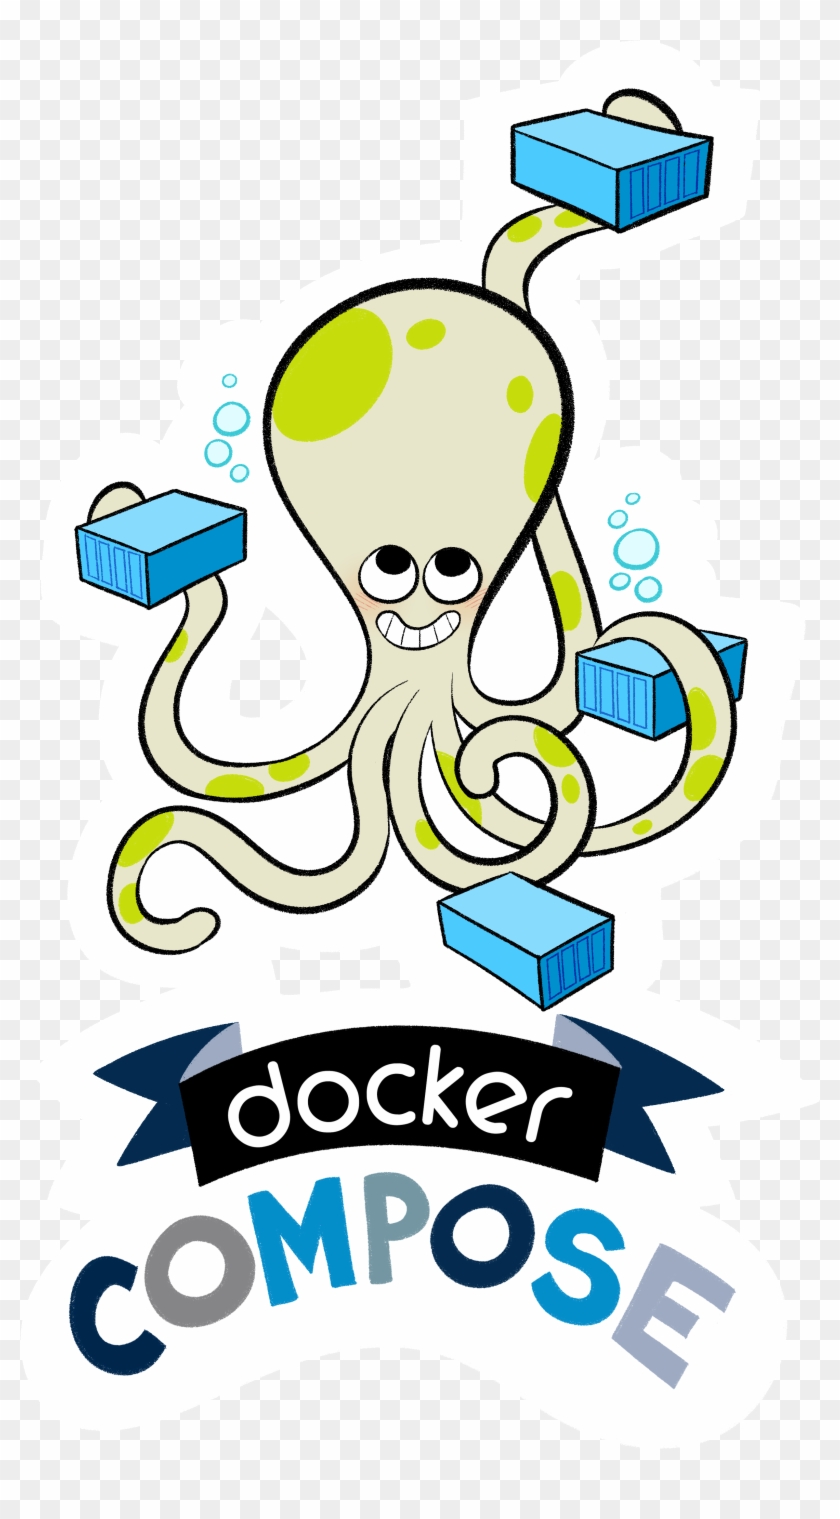 Docker Compose Logo - Docker #1053726